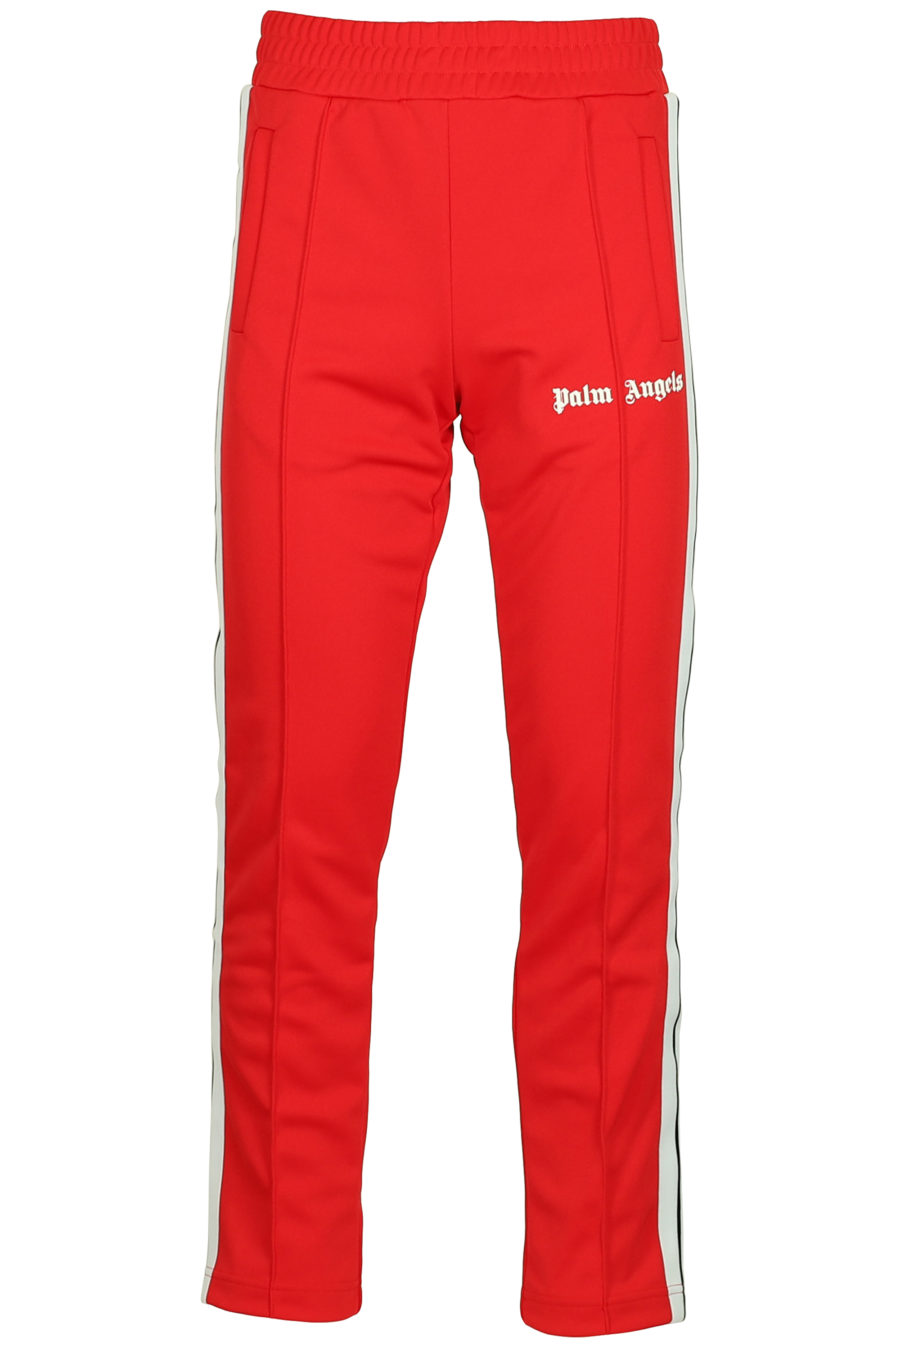 Pantalón rojo con logotipo y rayas laterales - IMG 3766